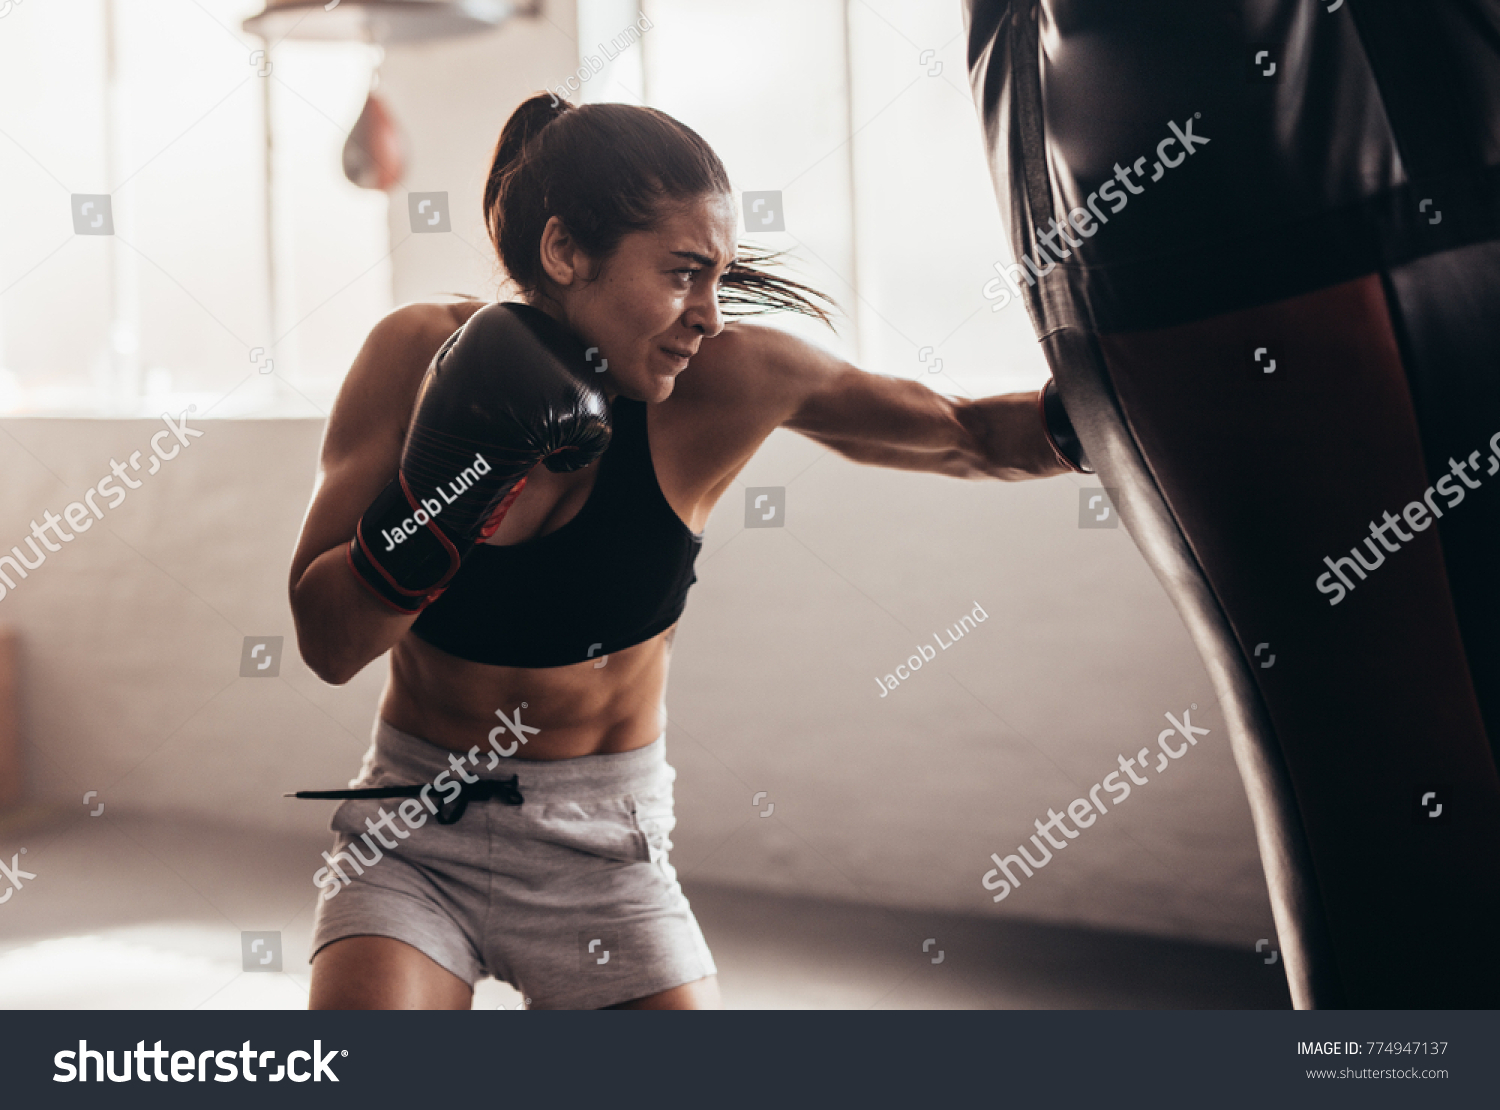 Female boxer hitting a huge punching bag at a boxing studio. Woman boxer training hard. #774947137